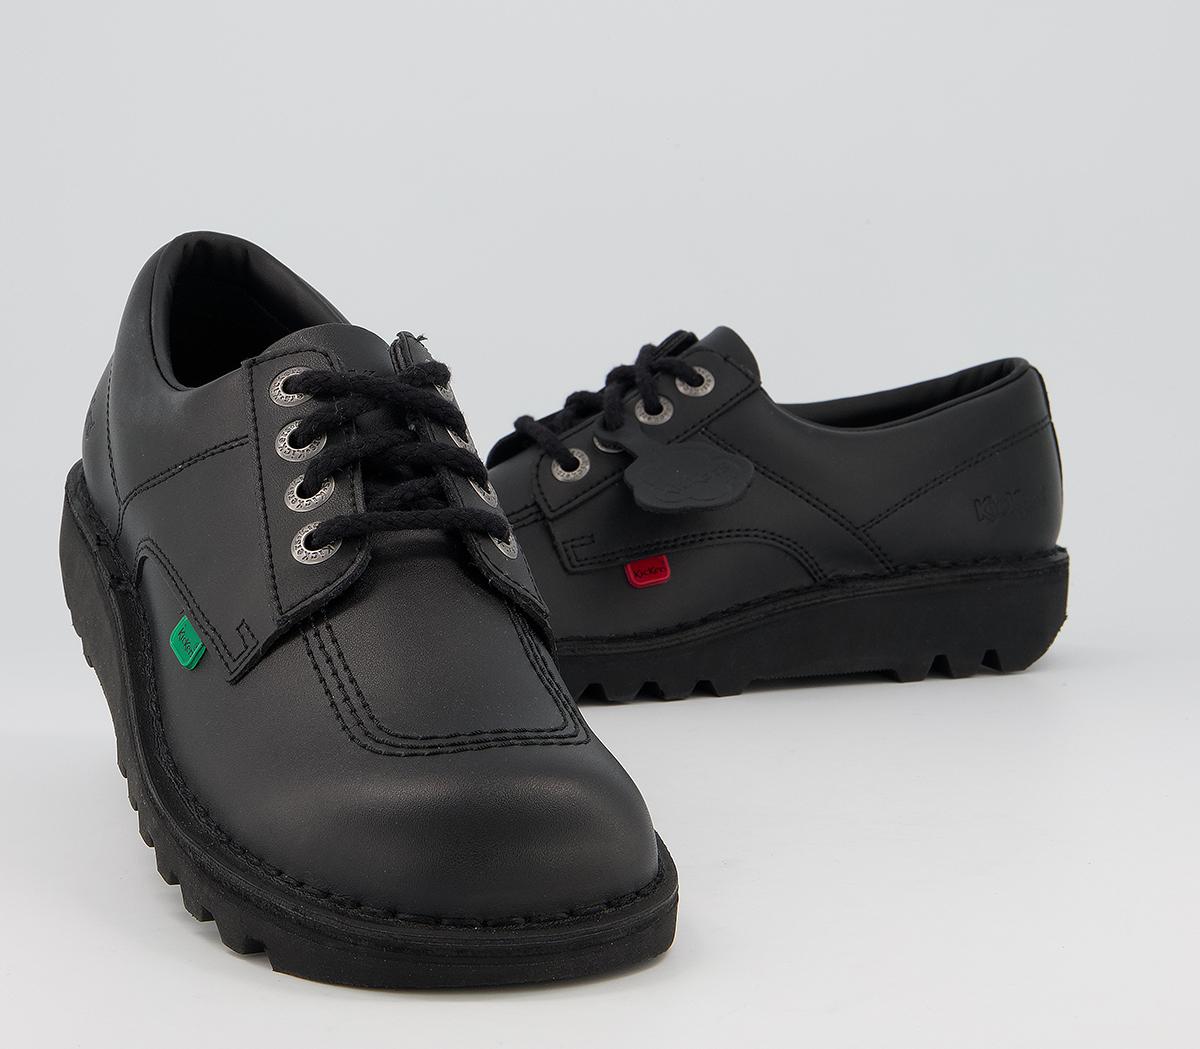 Kickers Kick Lo M Black Leather - Men’s Smart Shoes